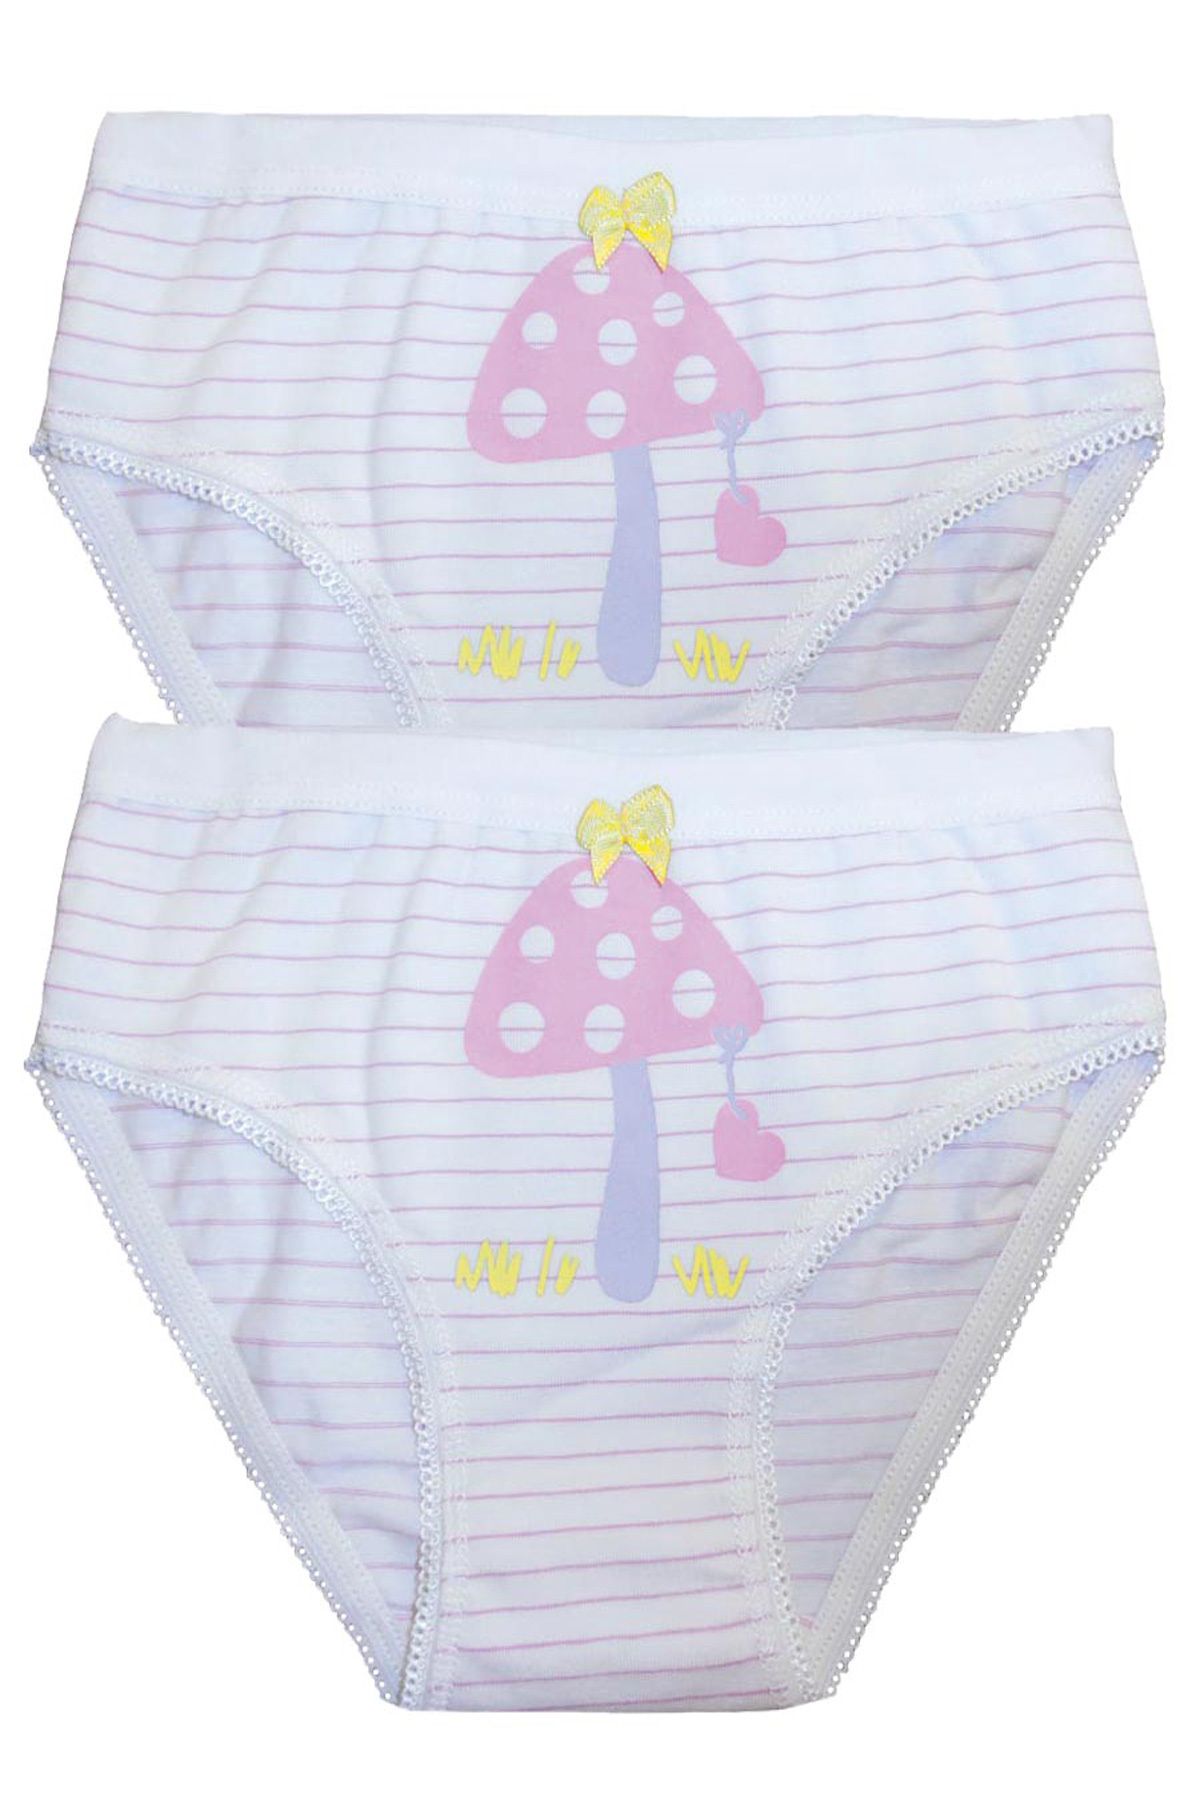 ÖZKAN underwear Özkan 40954 2'li Paket Kız Çocuk Külot